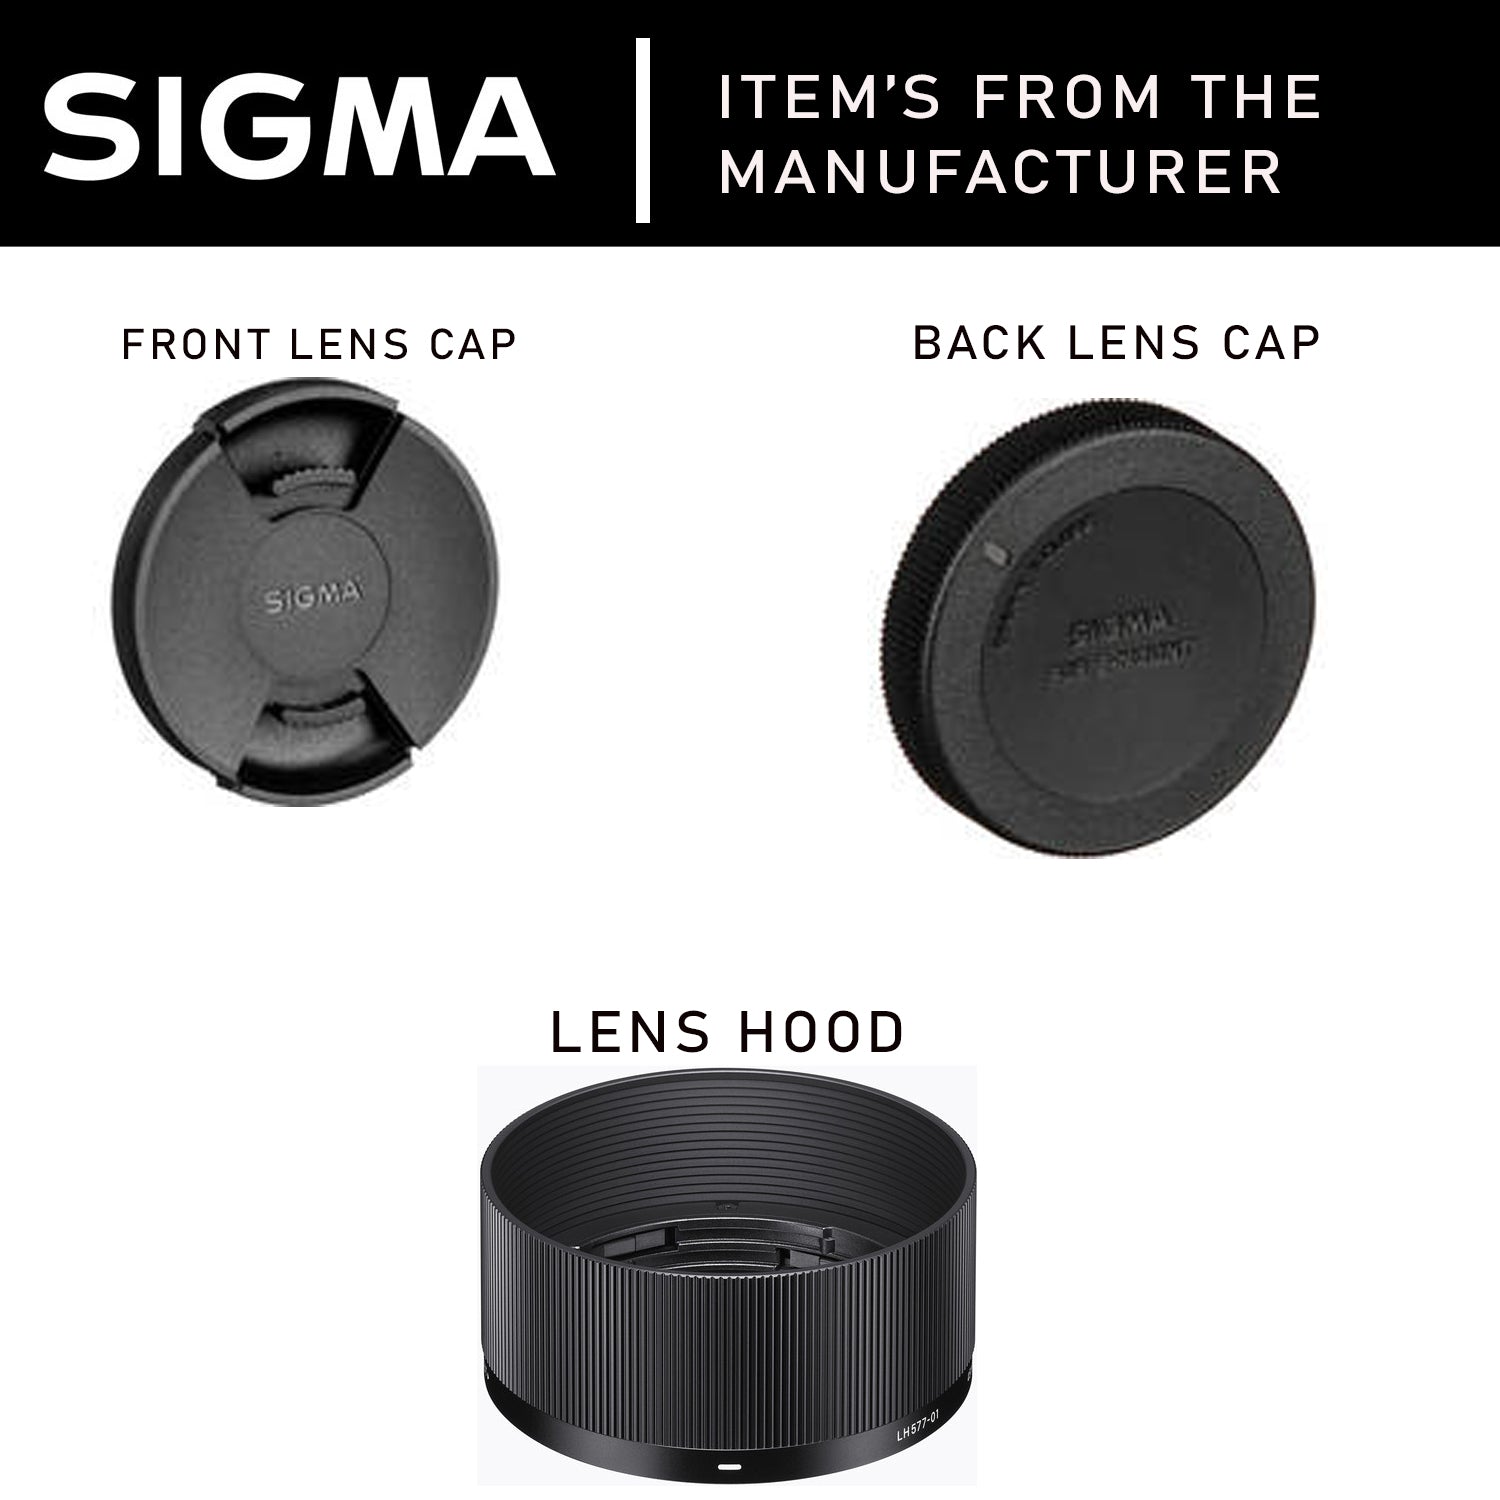 Sigma 45mm f/2.8 DG DN Contemporary Lens for Sony E + Accessories